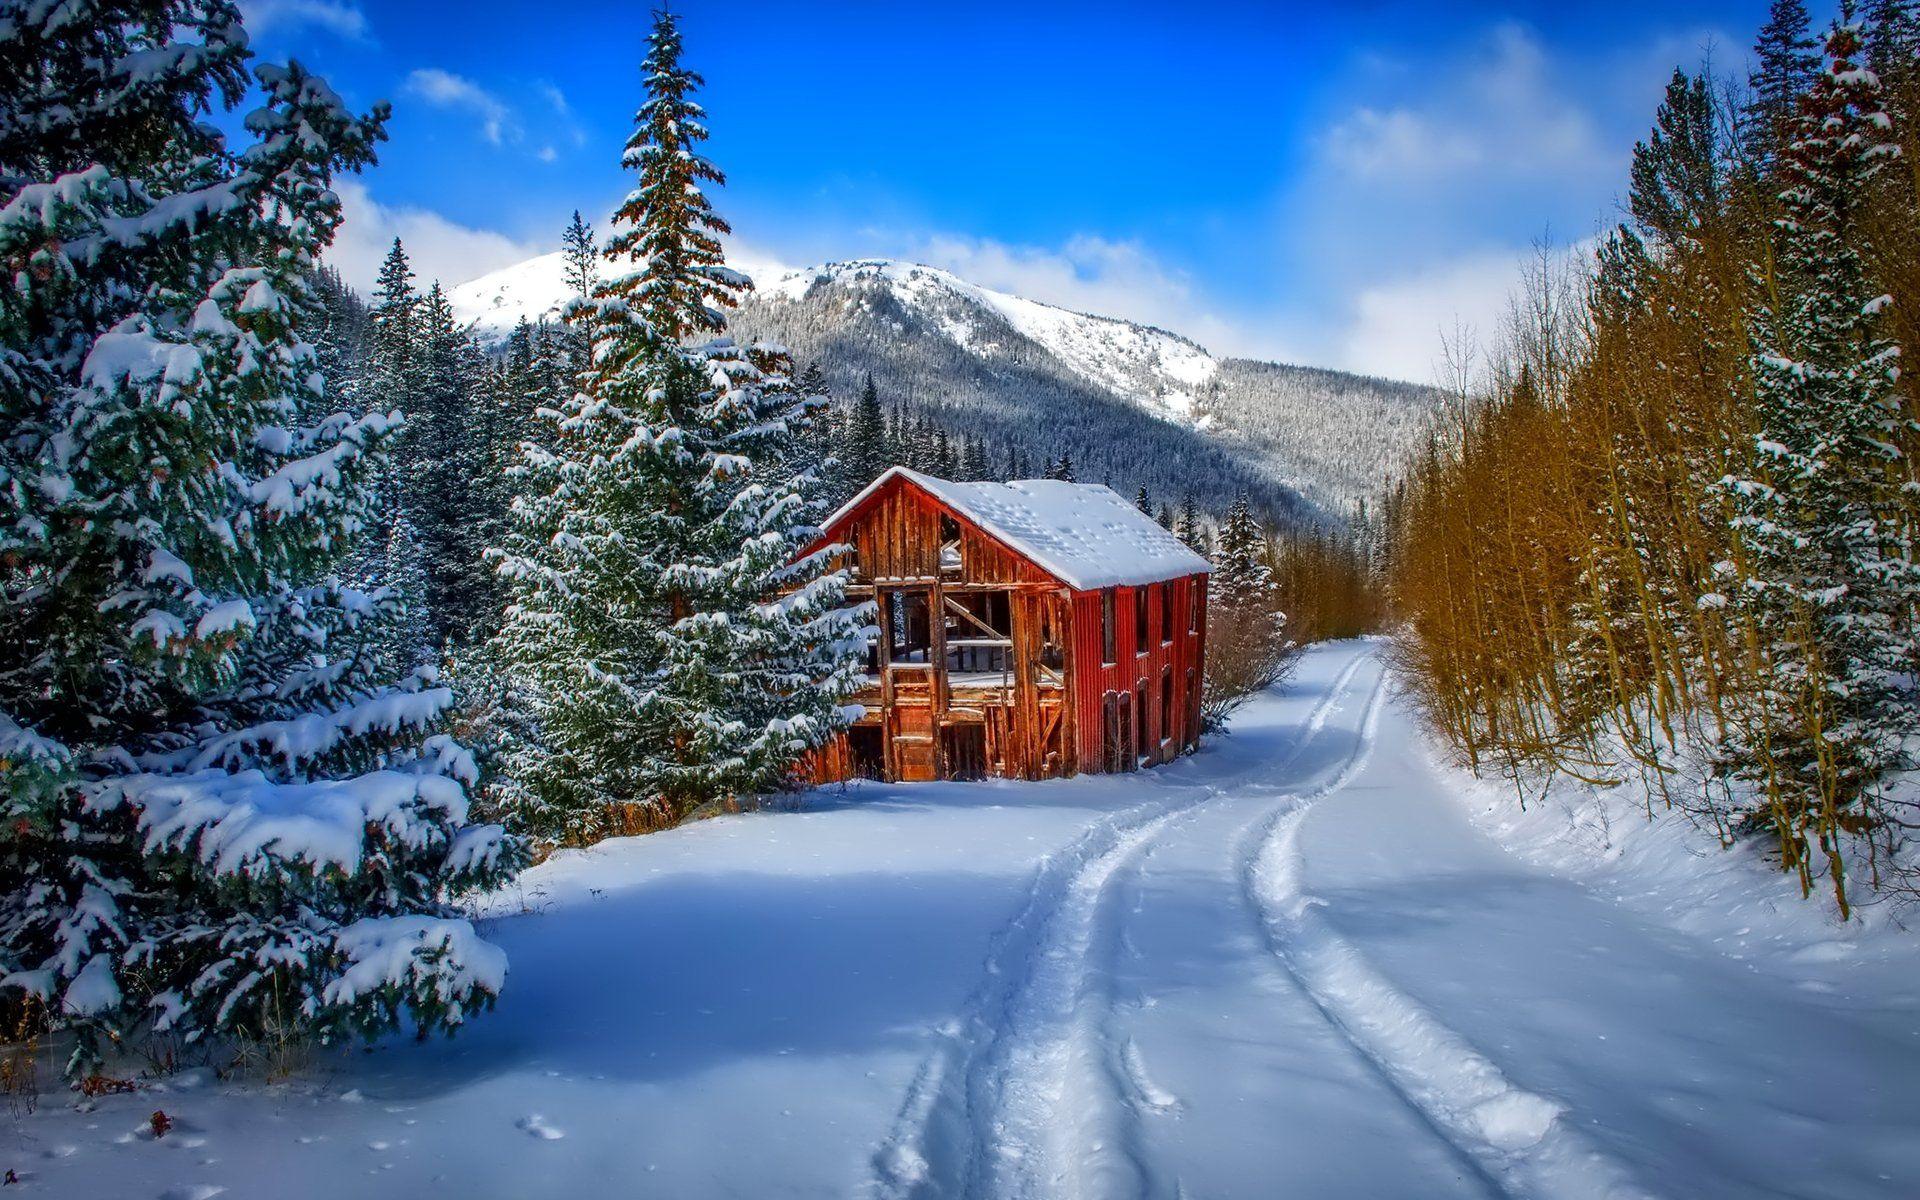 Christmas Cabin Images  Free Download on Freepik